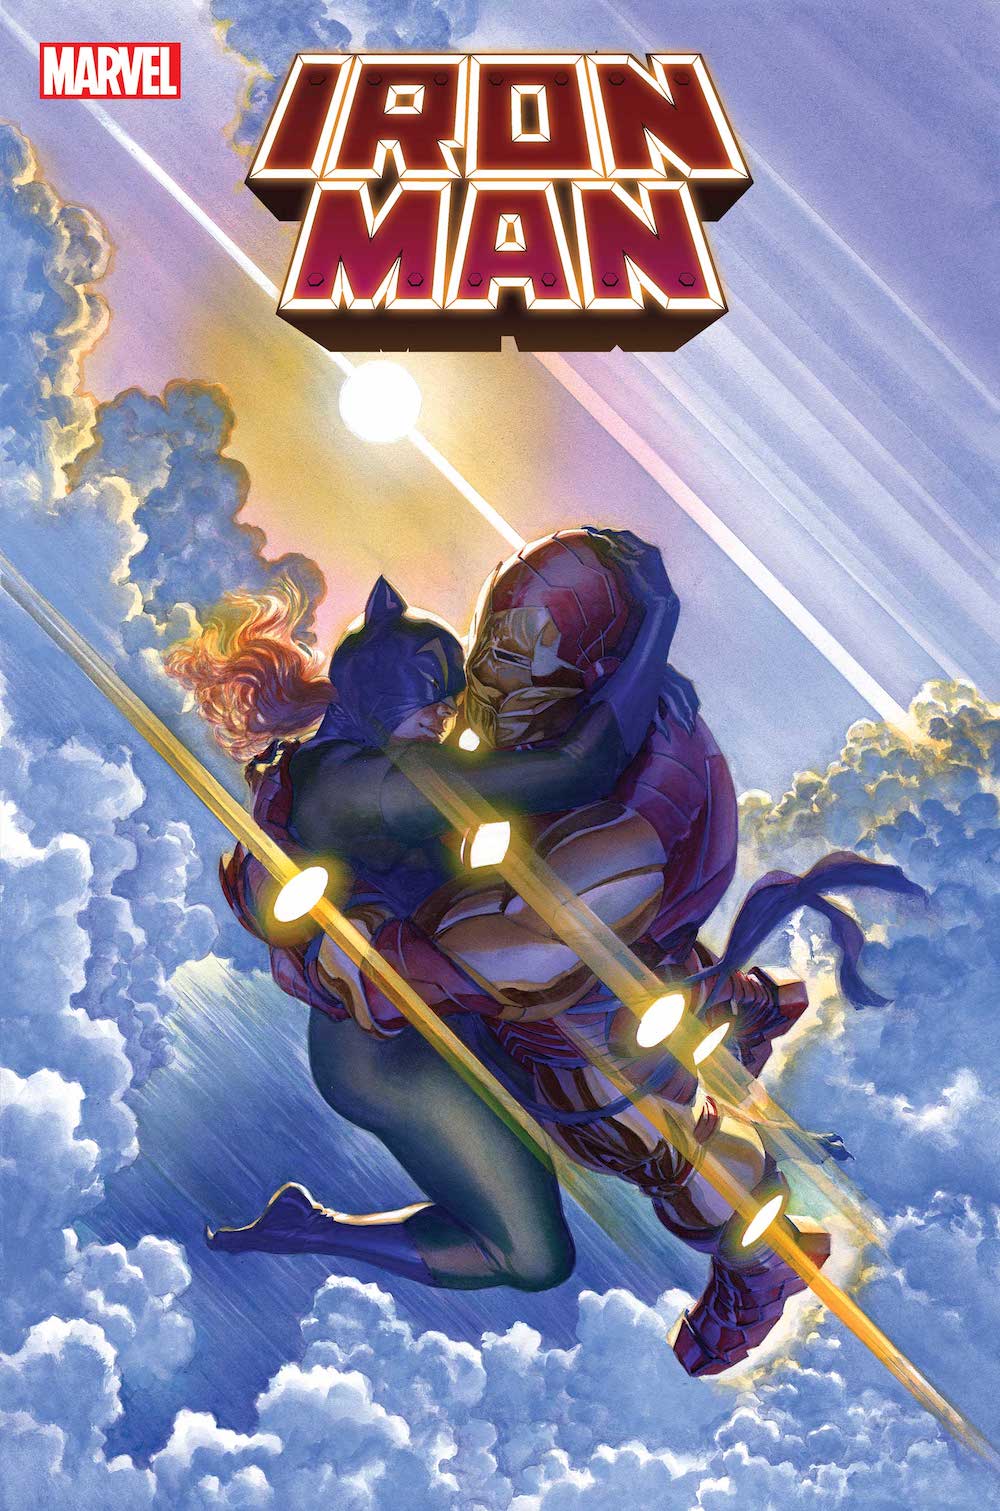 IRON MAN #20 Comic Cover PRESS